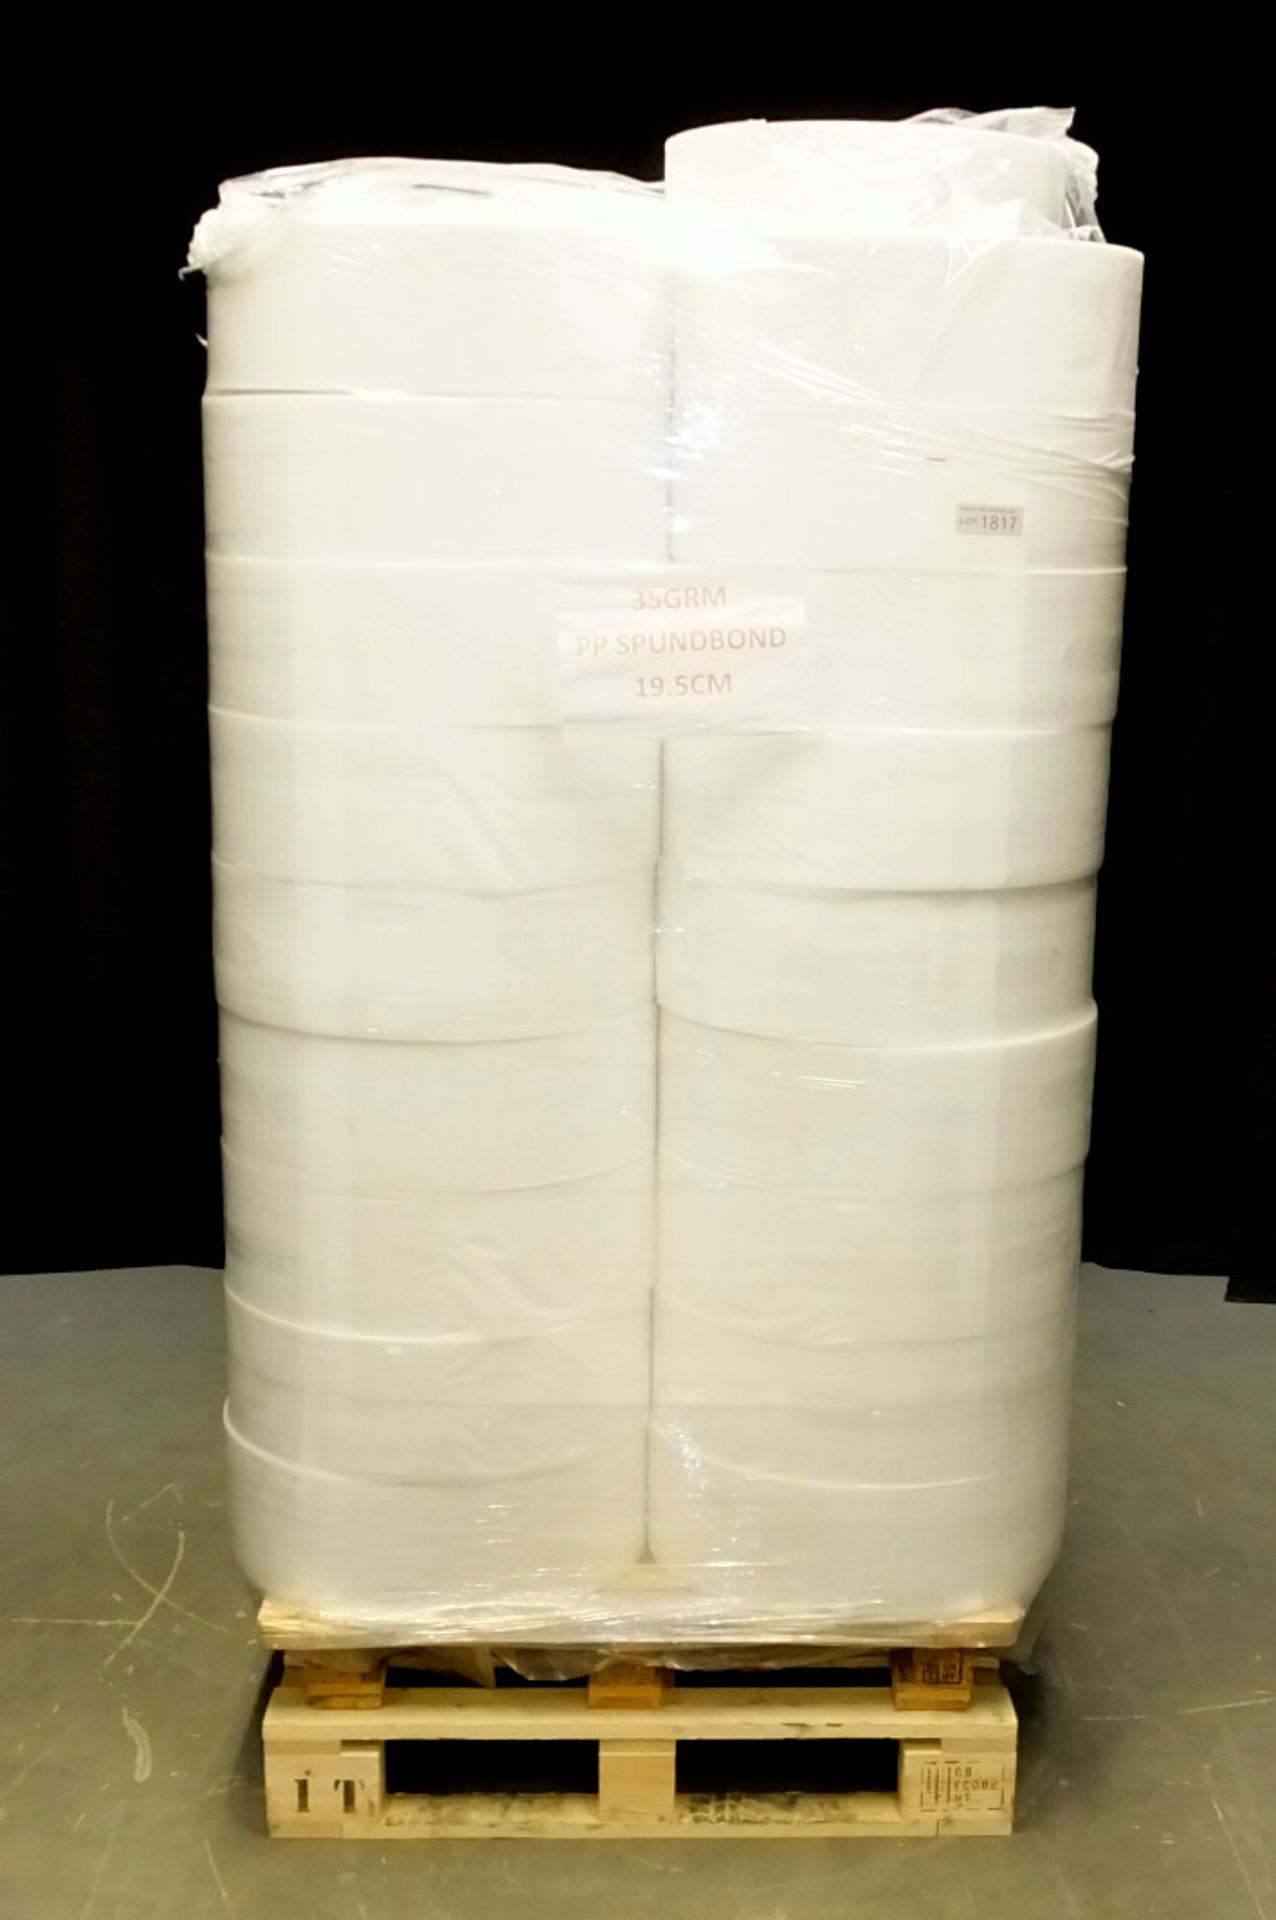 37x Rolls of Spun Polypropylene Nonwoven White 35 gram Inner Spunbond Fabric - 19.5cm x 1500m